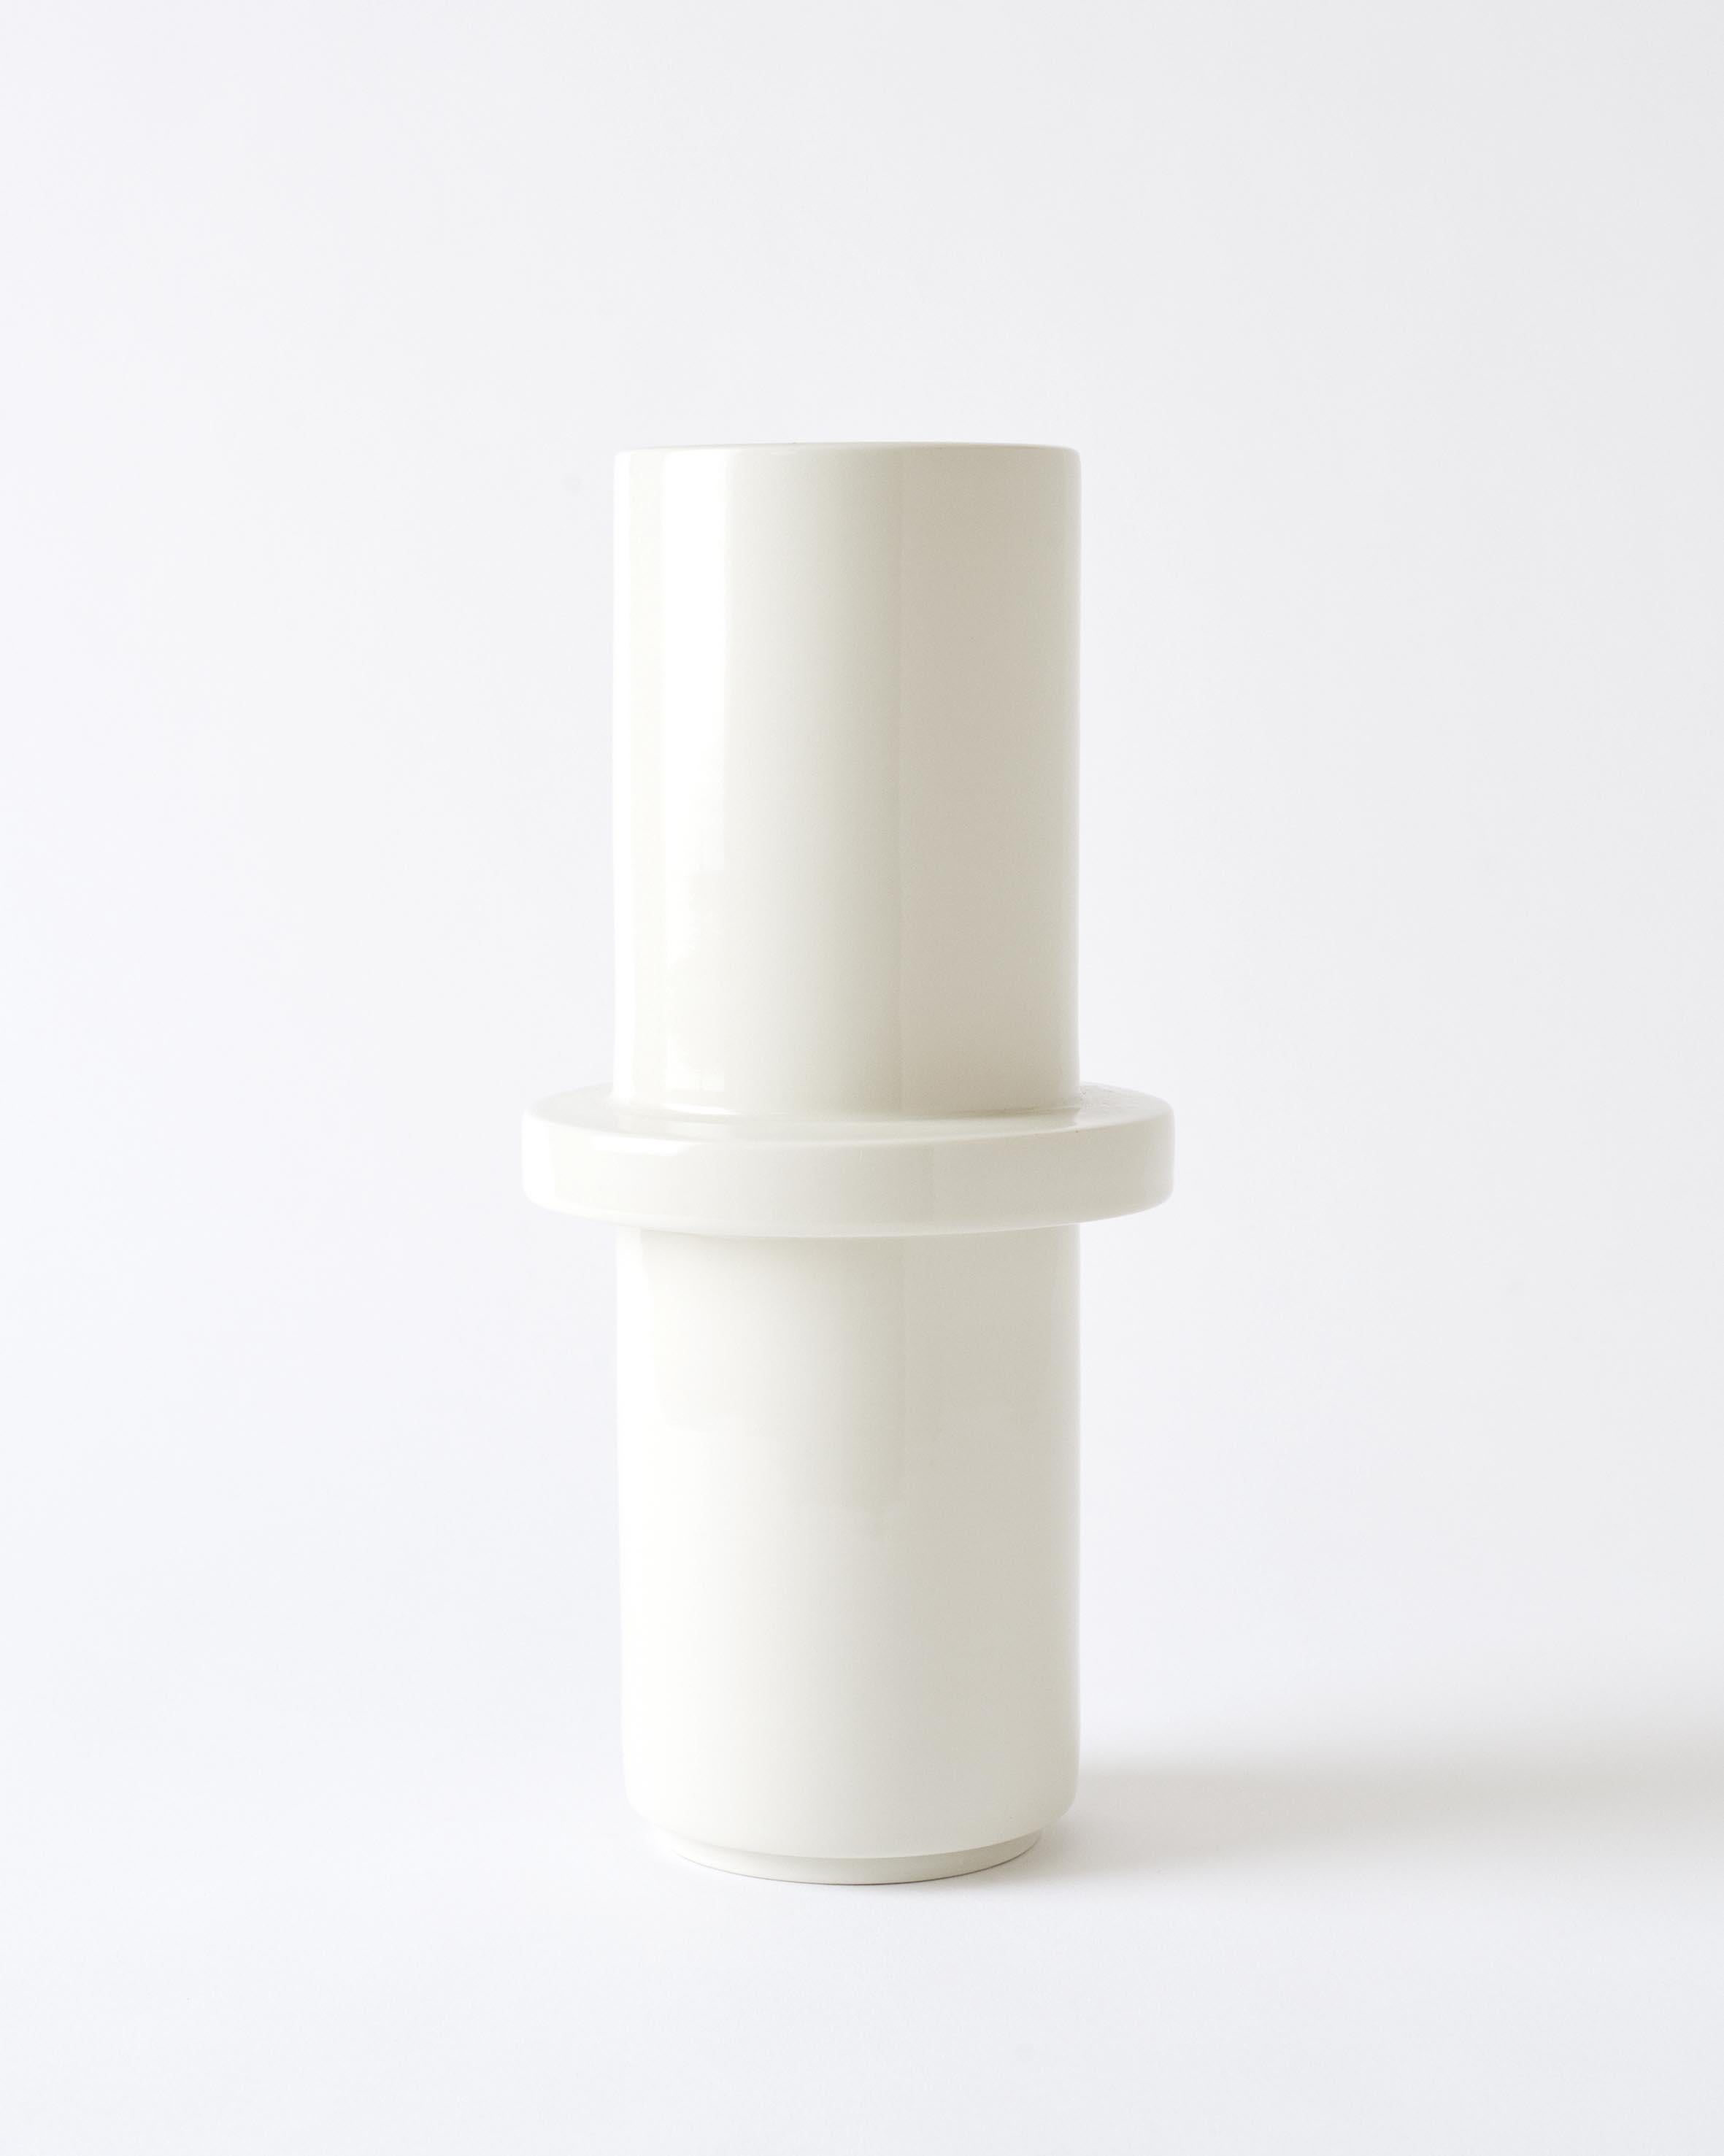 Contemporary Porcelain Vase, Handmade, Minimalist, Functional For Sale 1